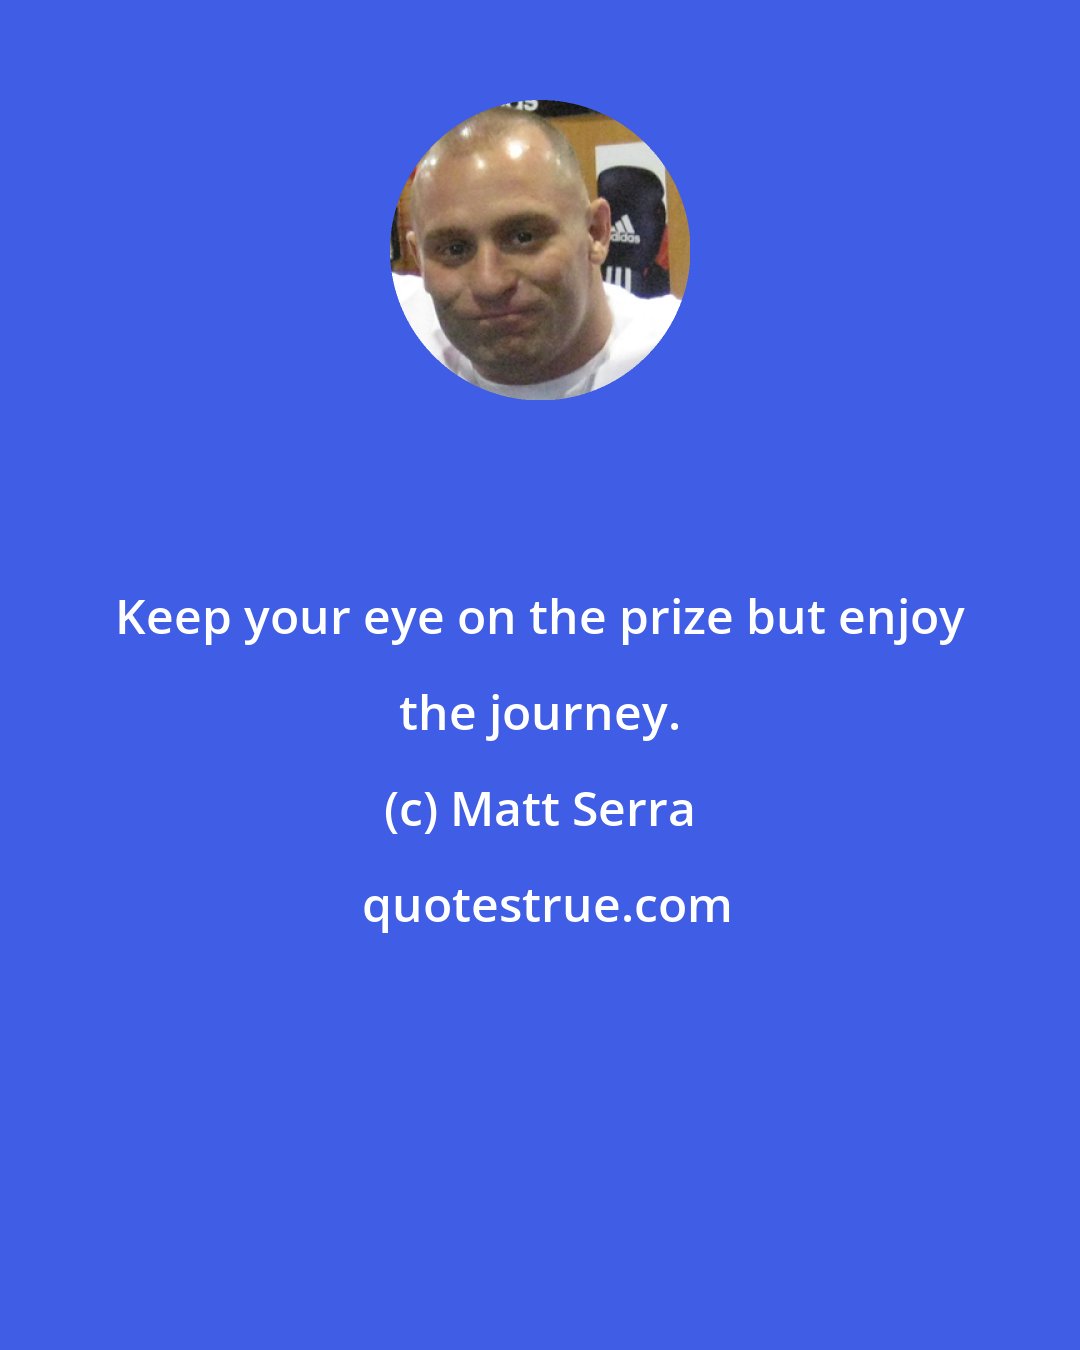 Matt Serra: Keep your eye on the prize but enjoy the journey.